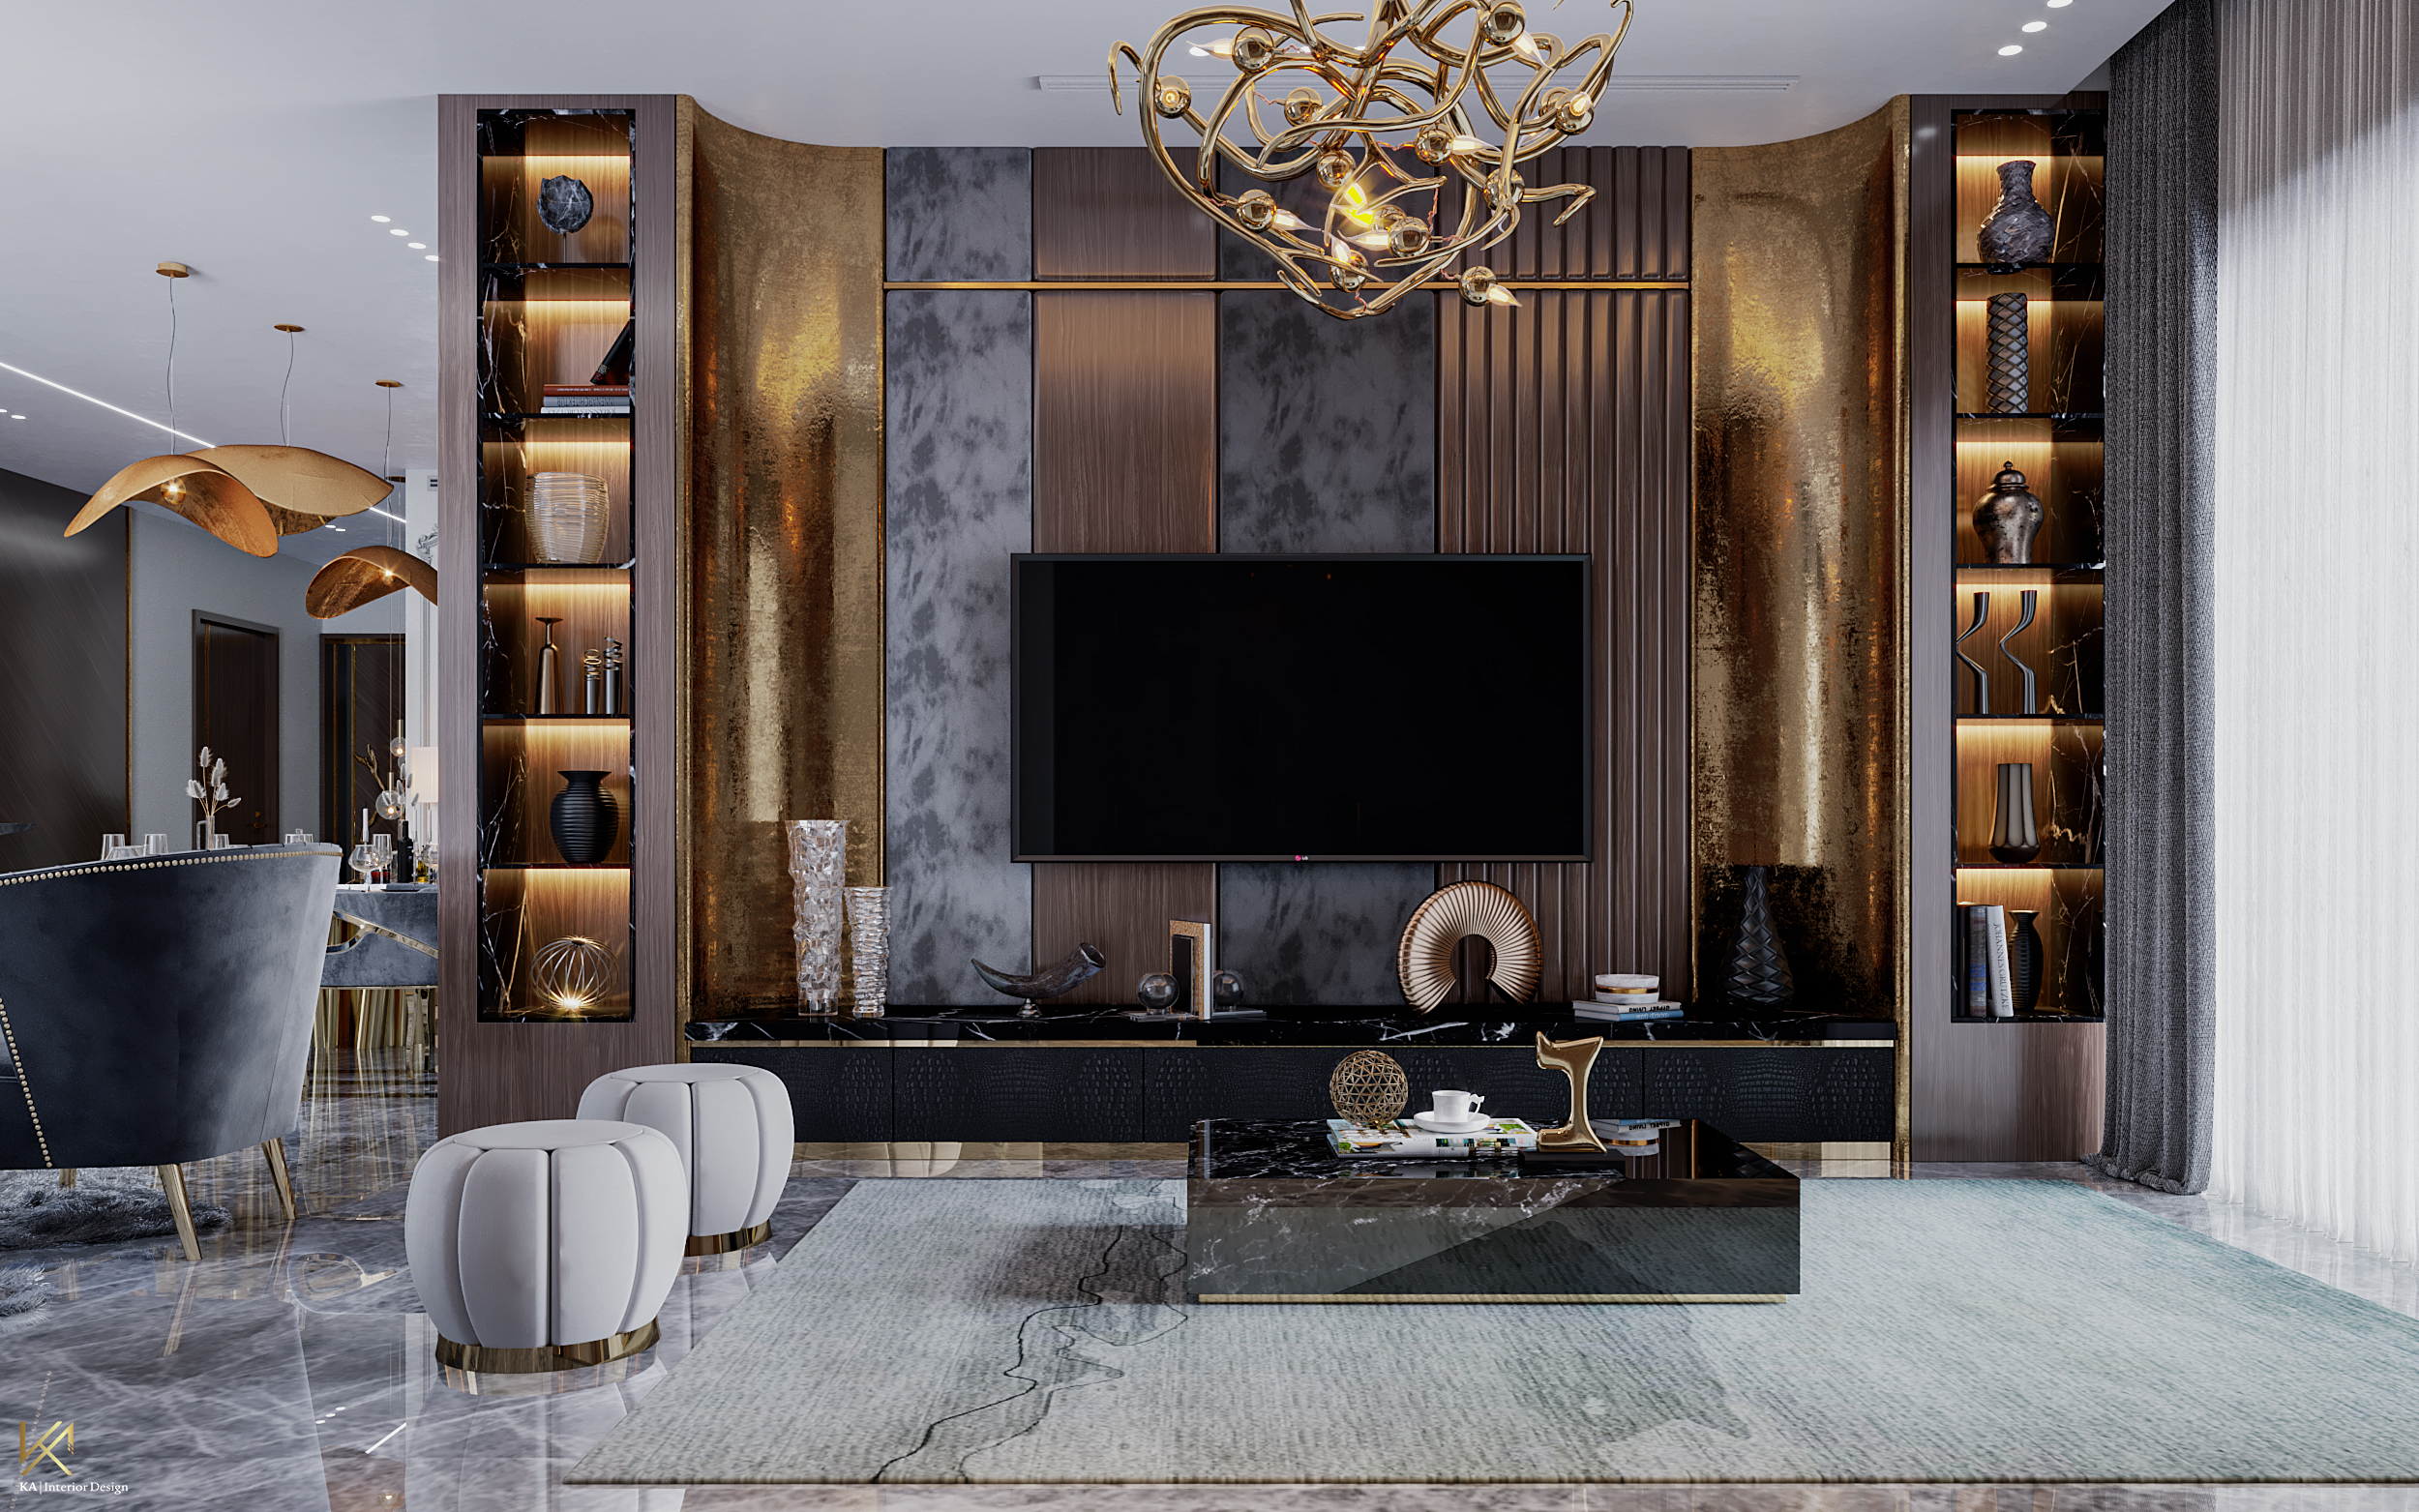 luxury living room in dark colors and golden details